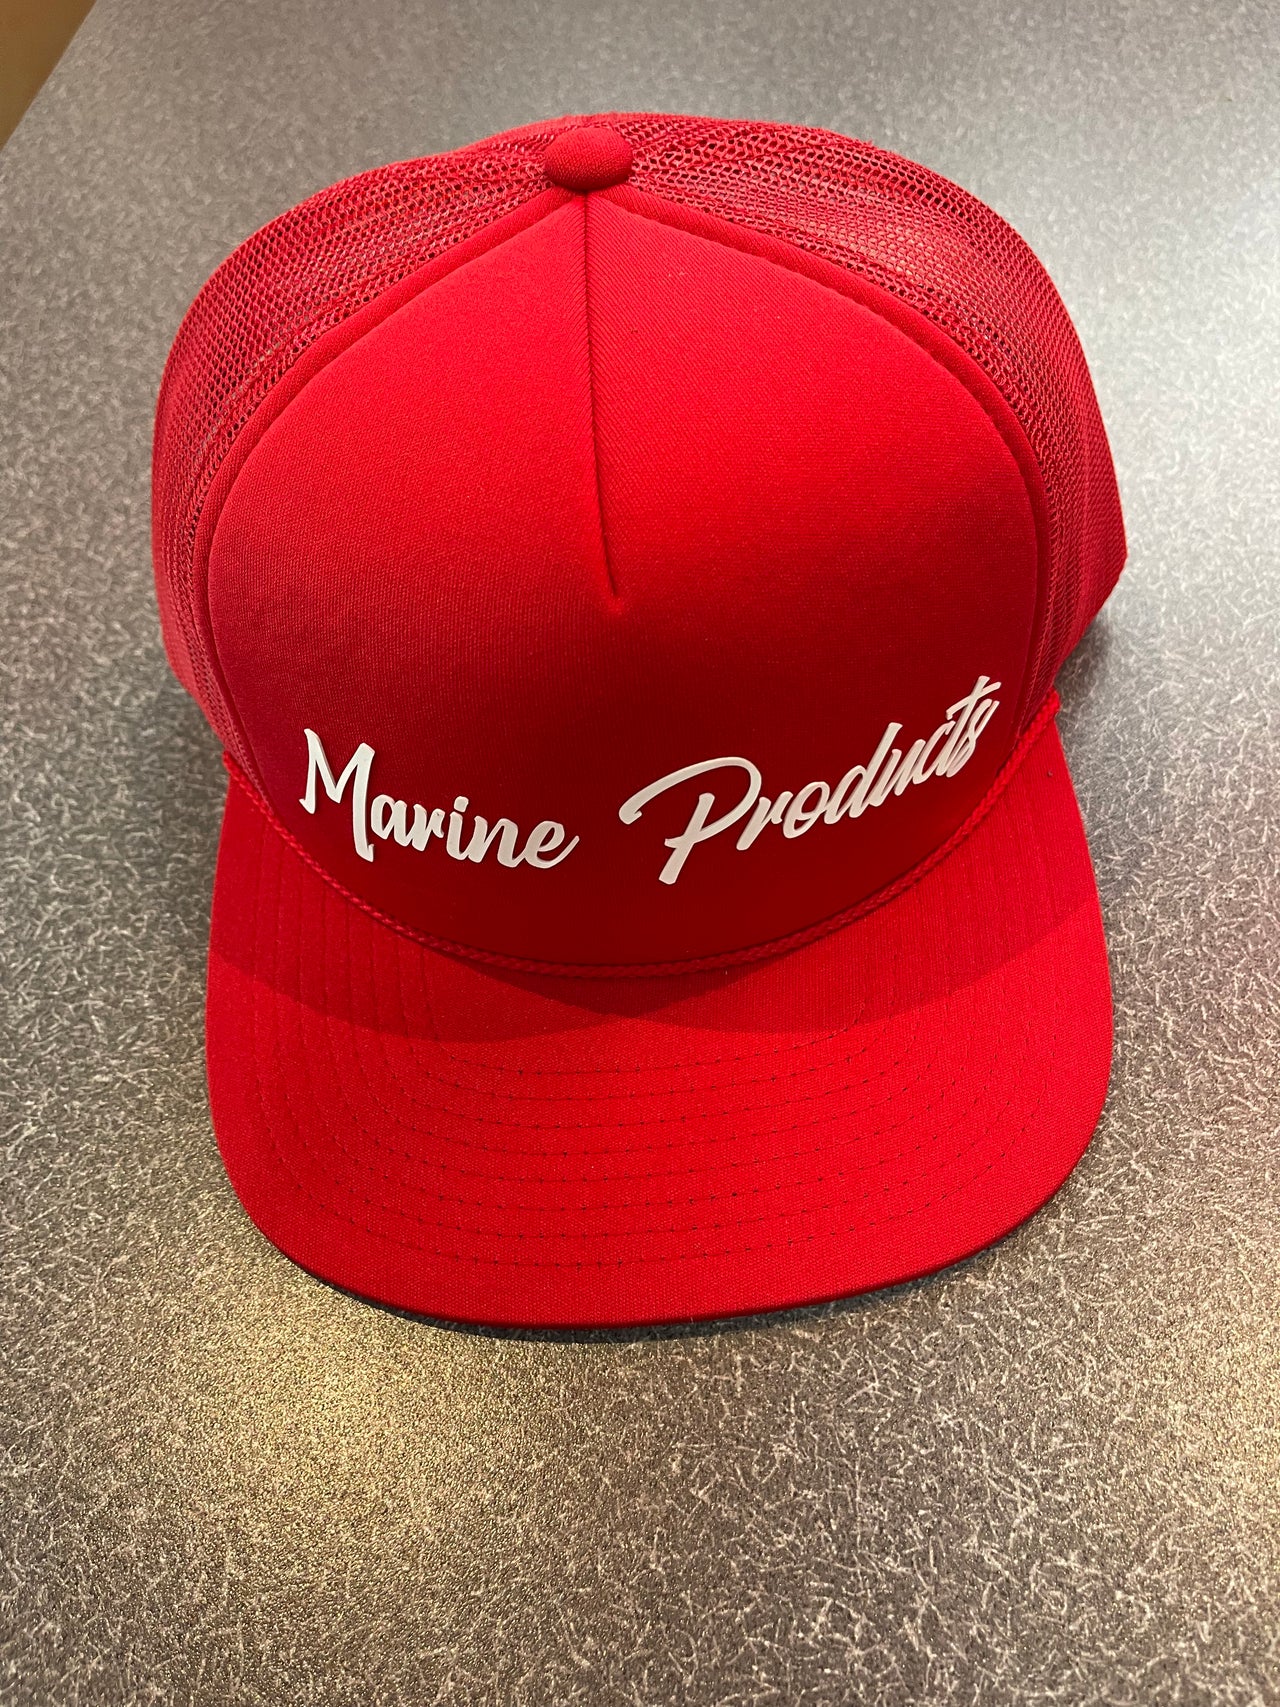 Marine Products Red Trucker Hat w/ Cursive MP